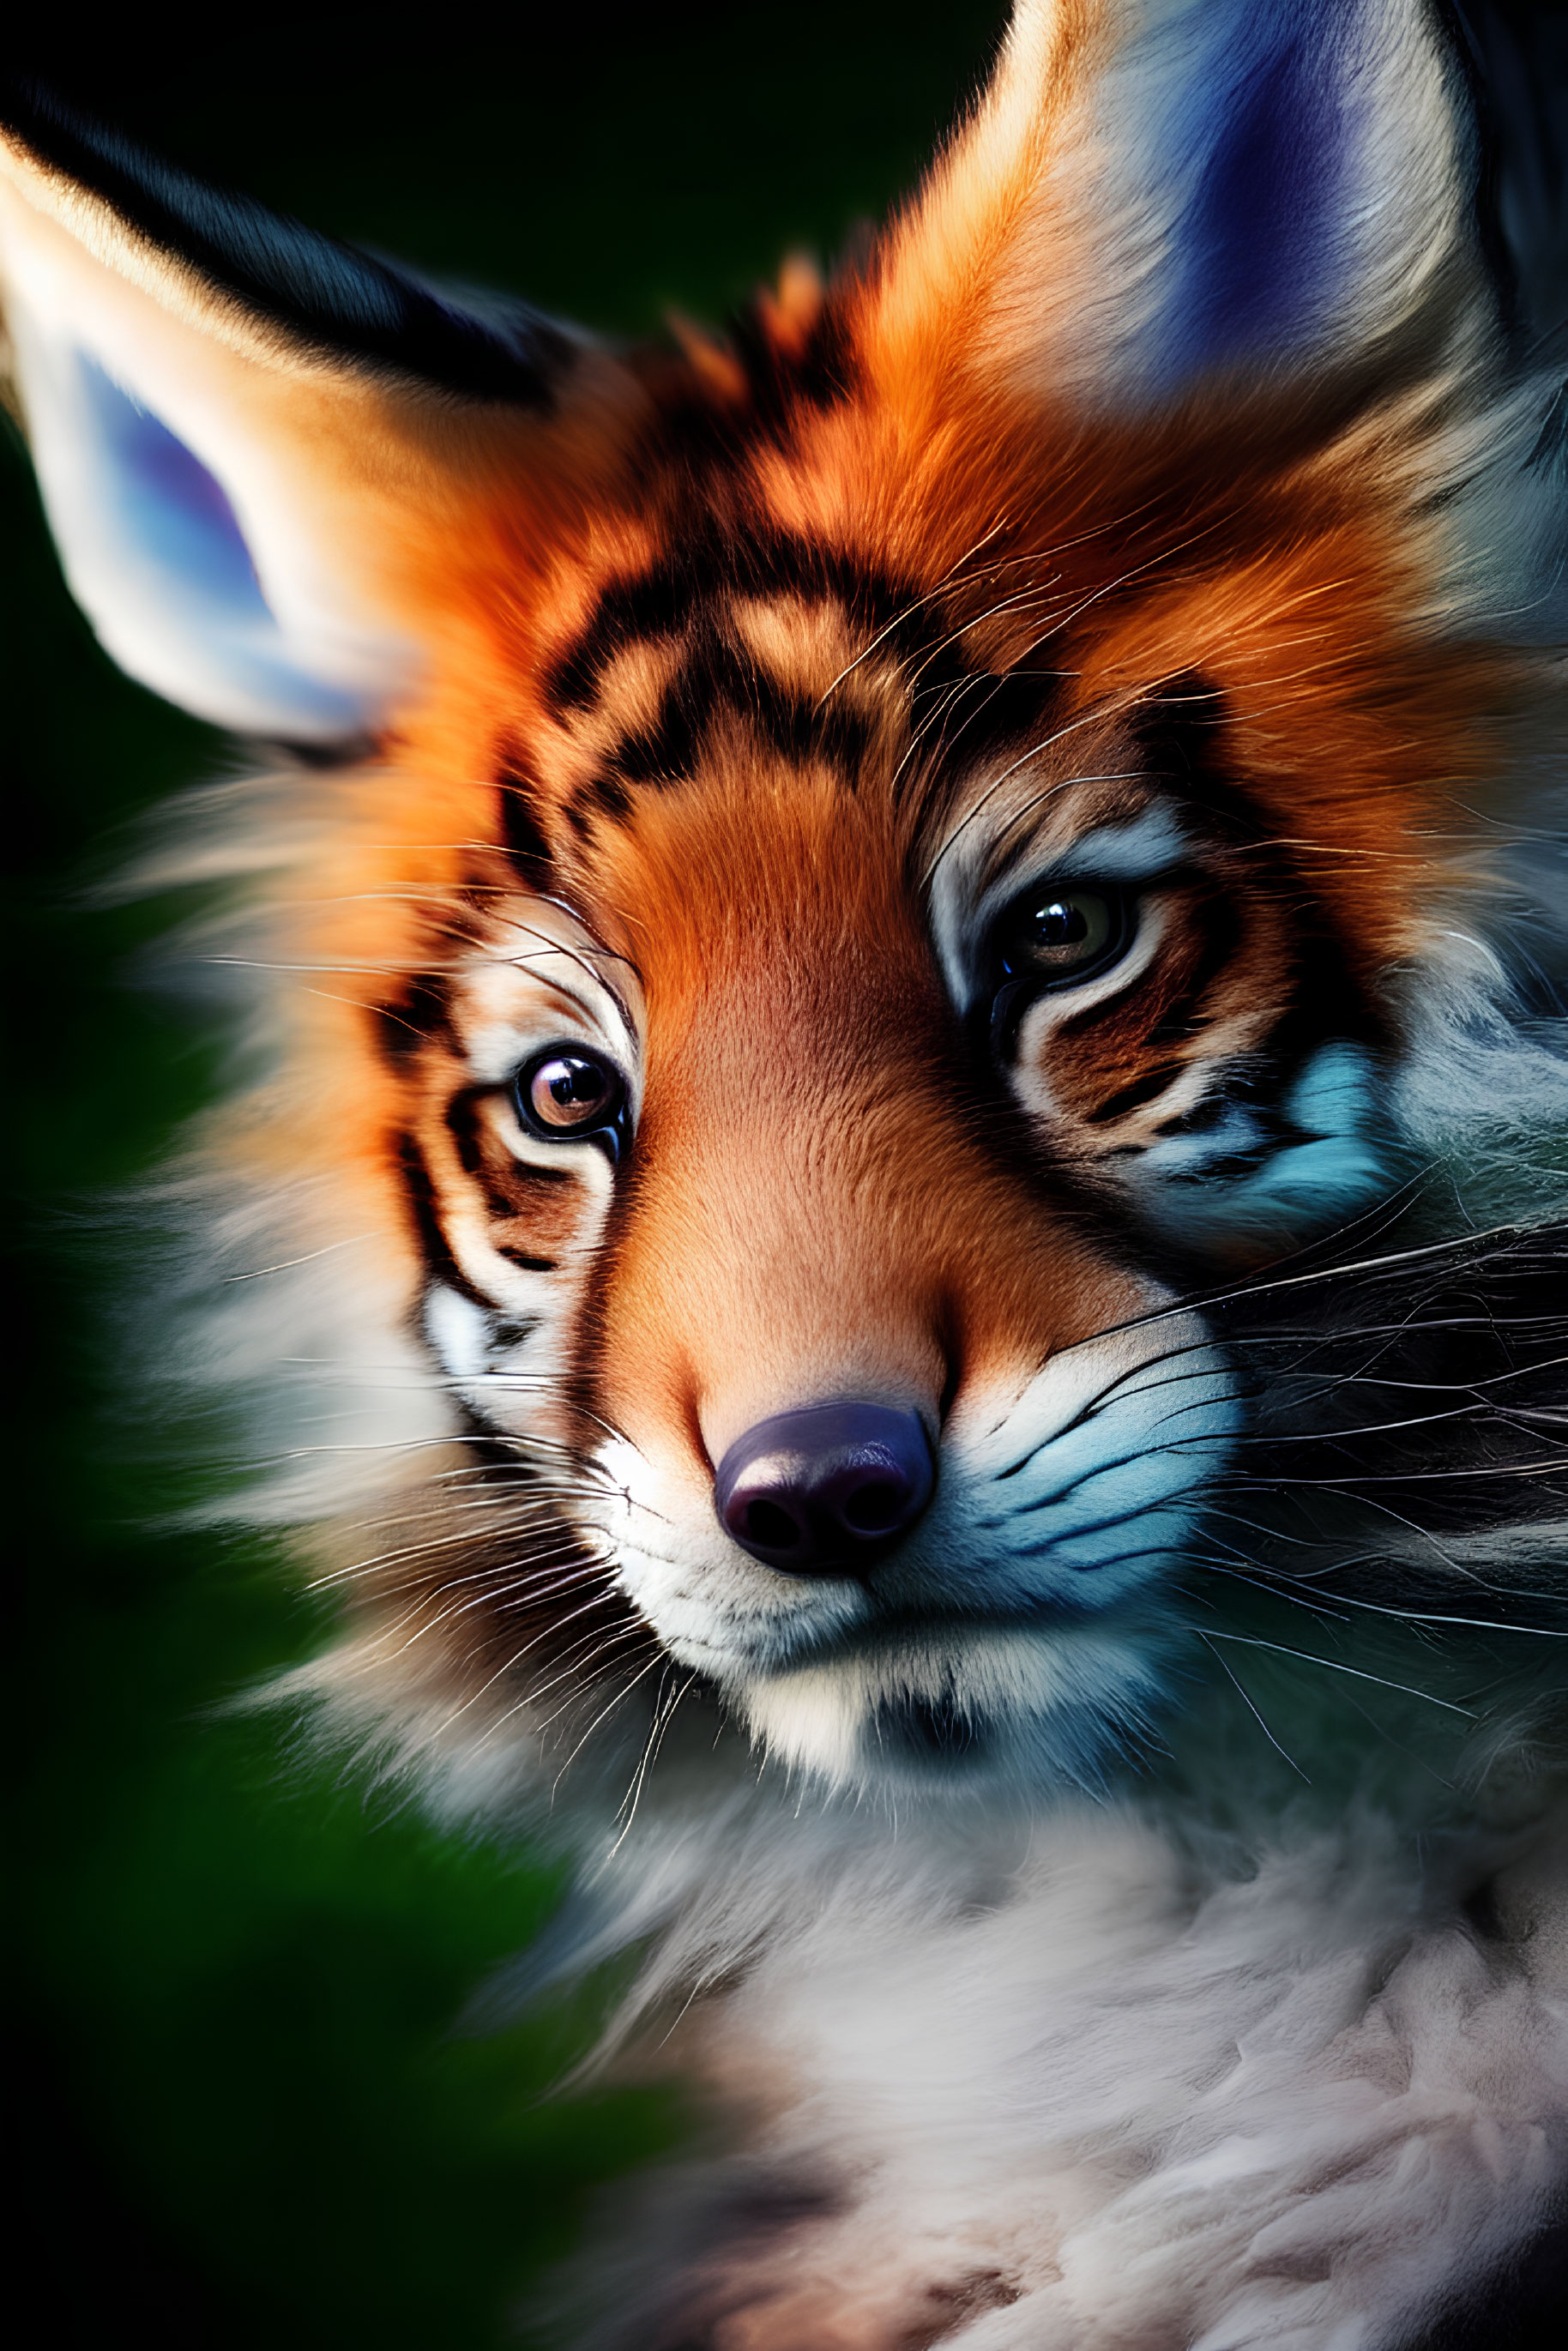 Detailed Tiger Artwork: Blue-Eyed Tiger with White Fur against Dark Background